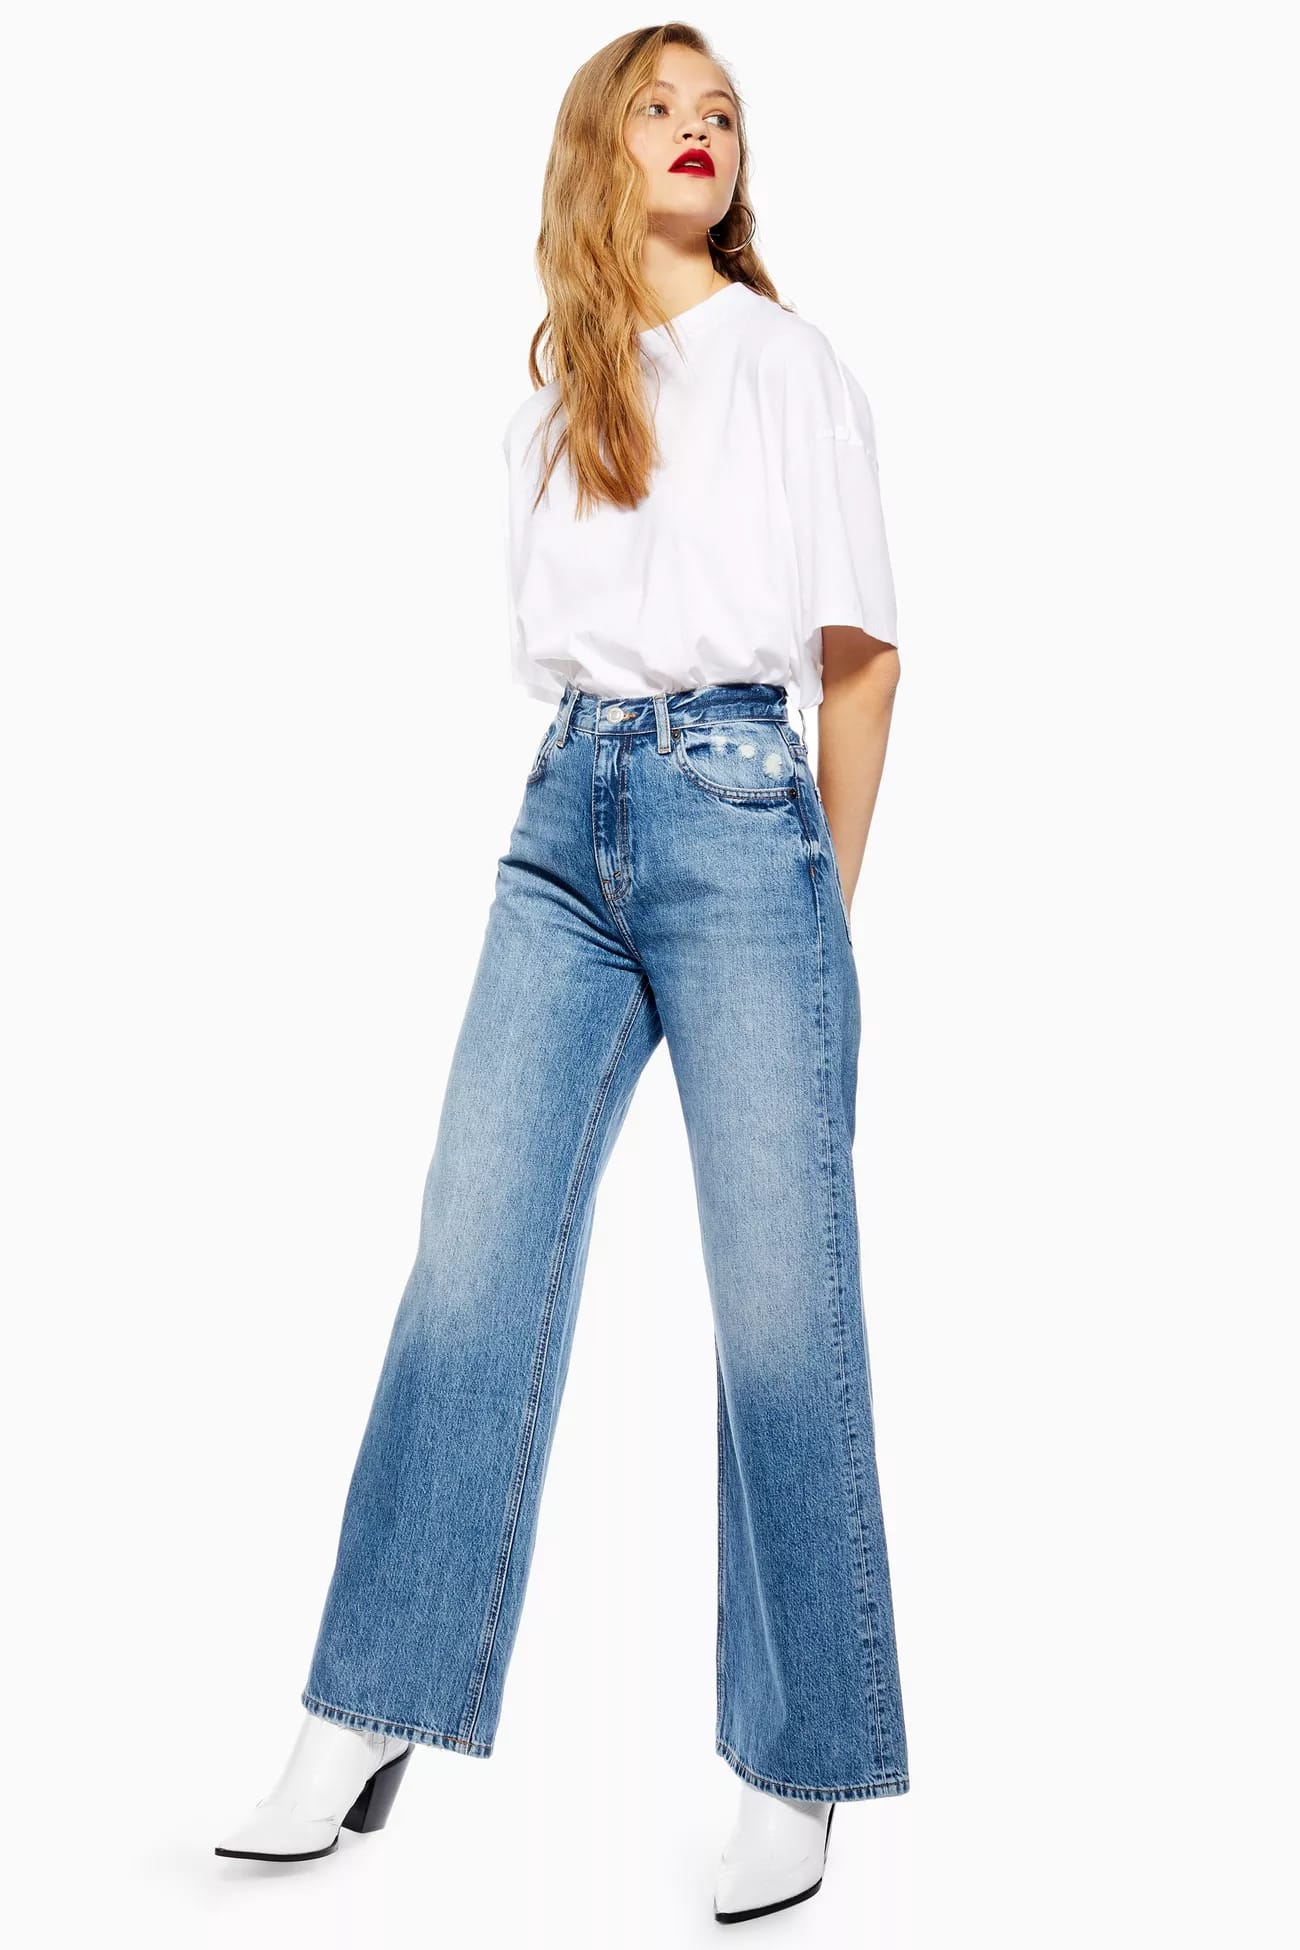 are true religion jeans still in style 2019